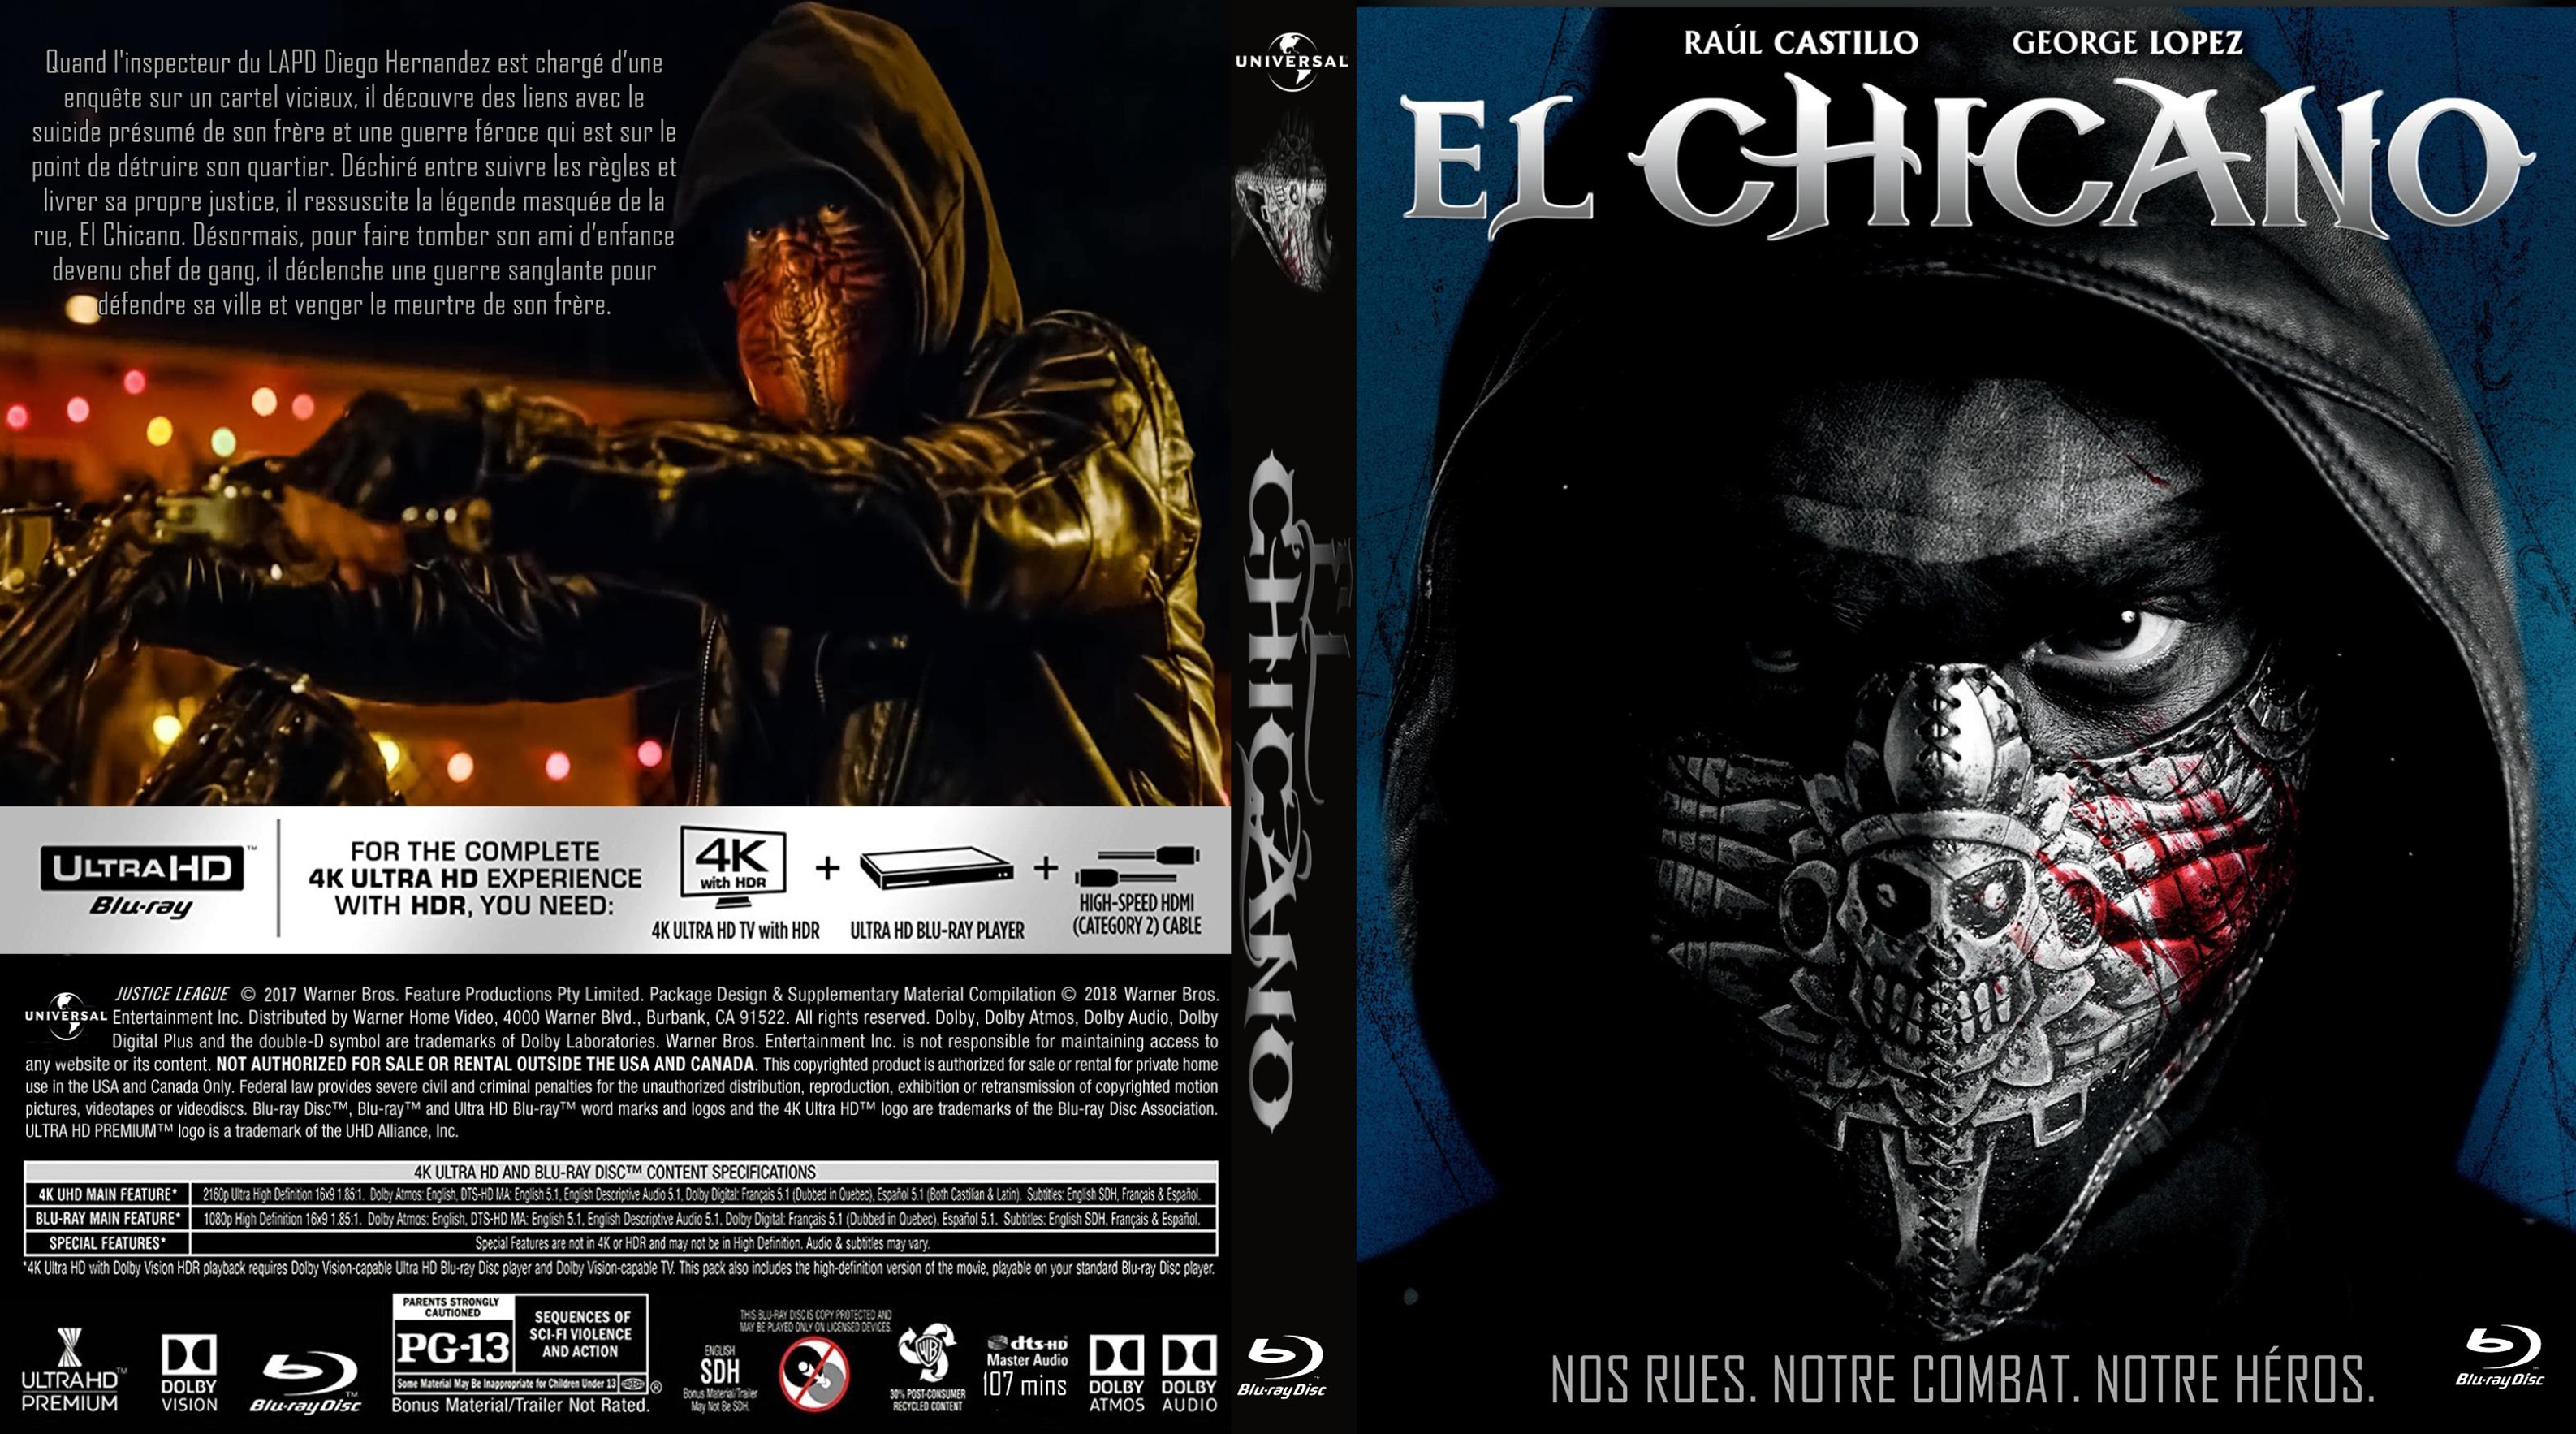 Jaquette DVD El Chicano custom (BLU-RAY)